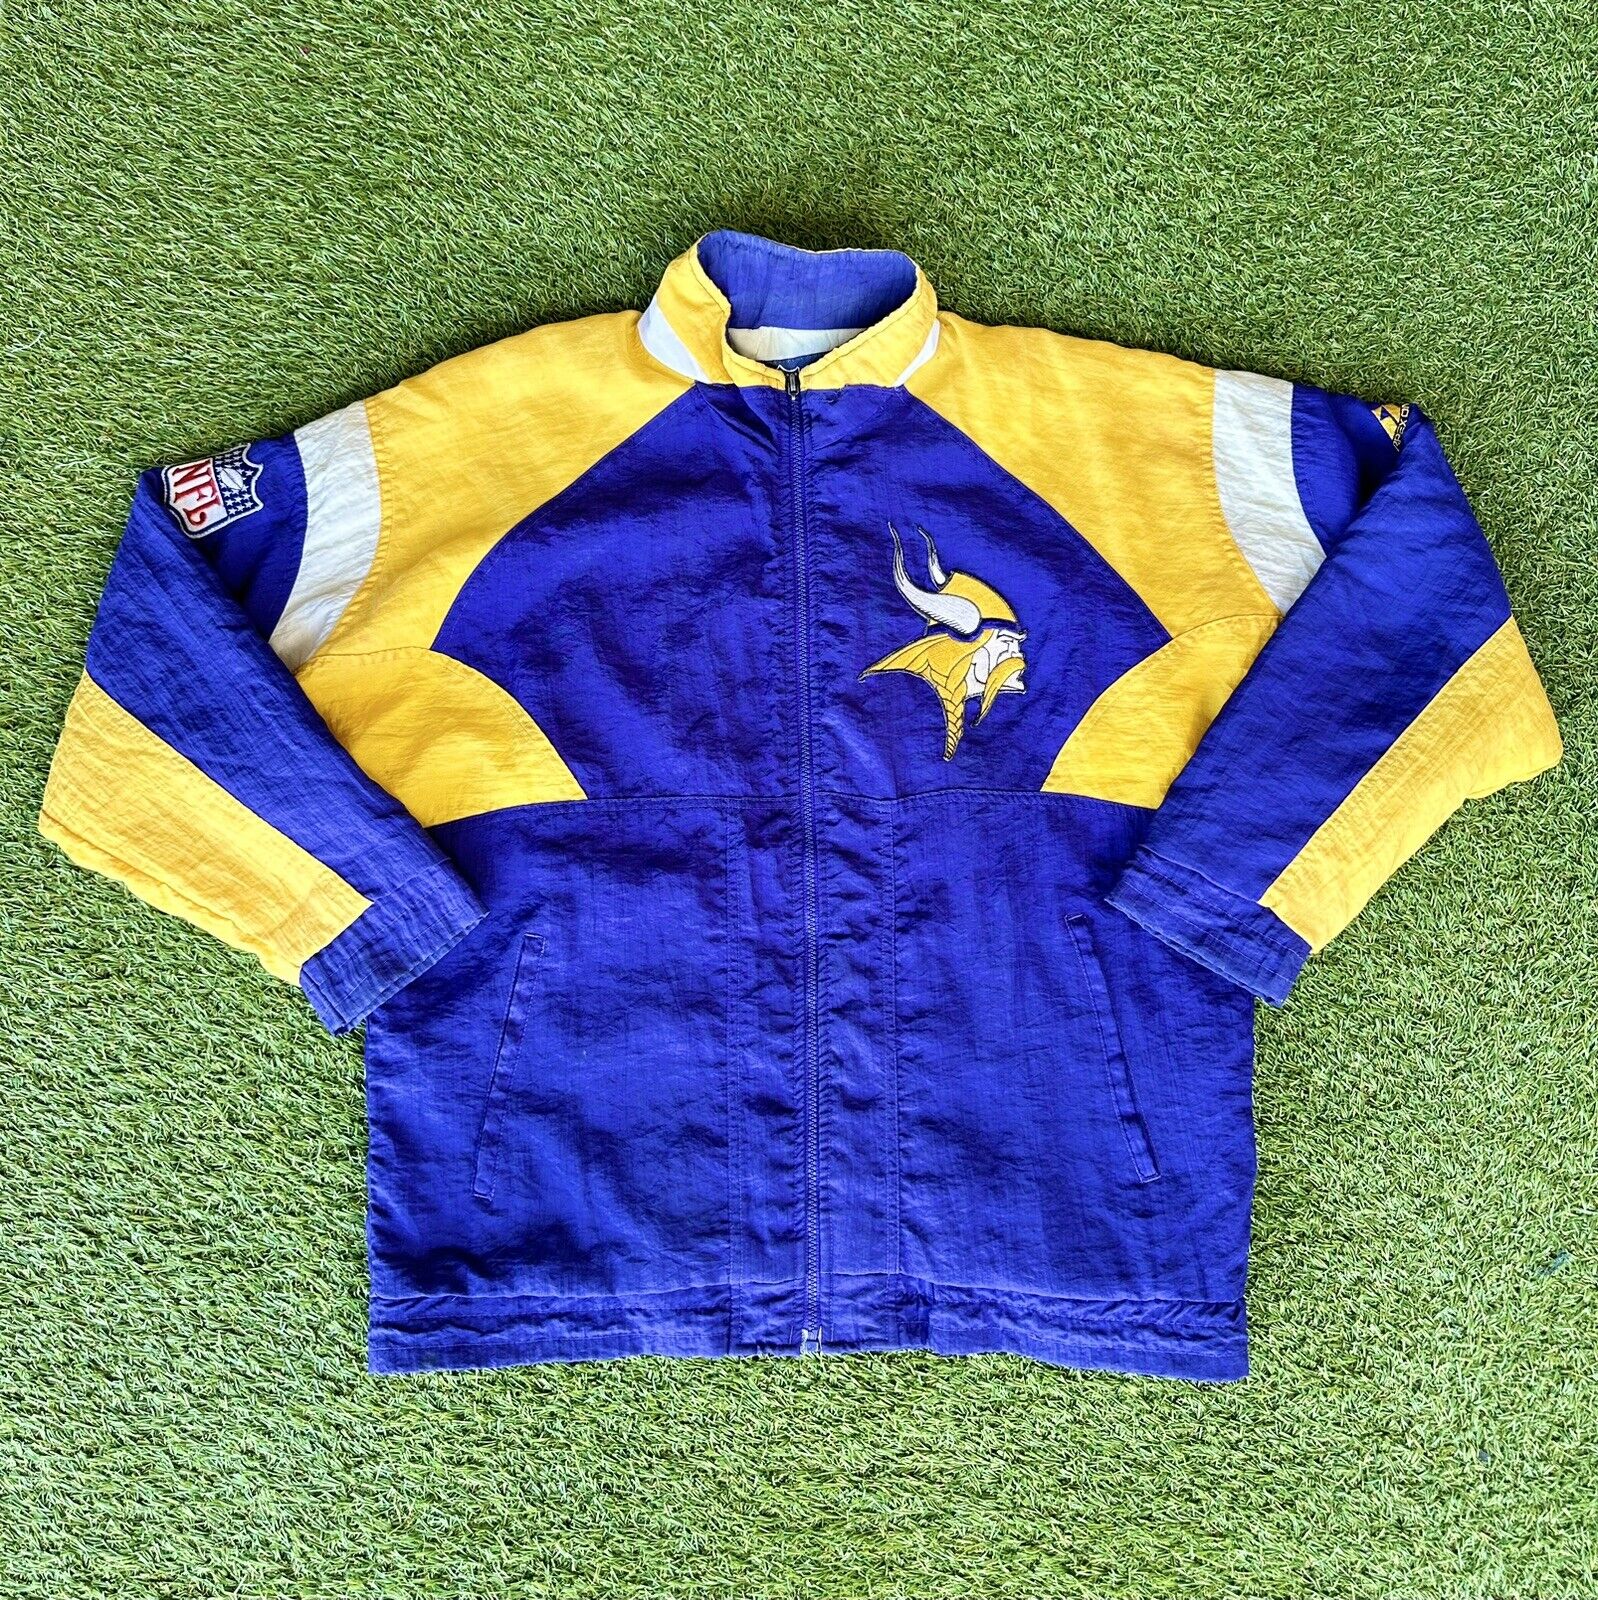 Size XL - Vintage Apex One Minnesota Vikings Jacket